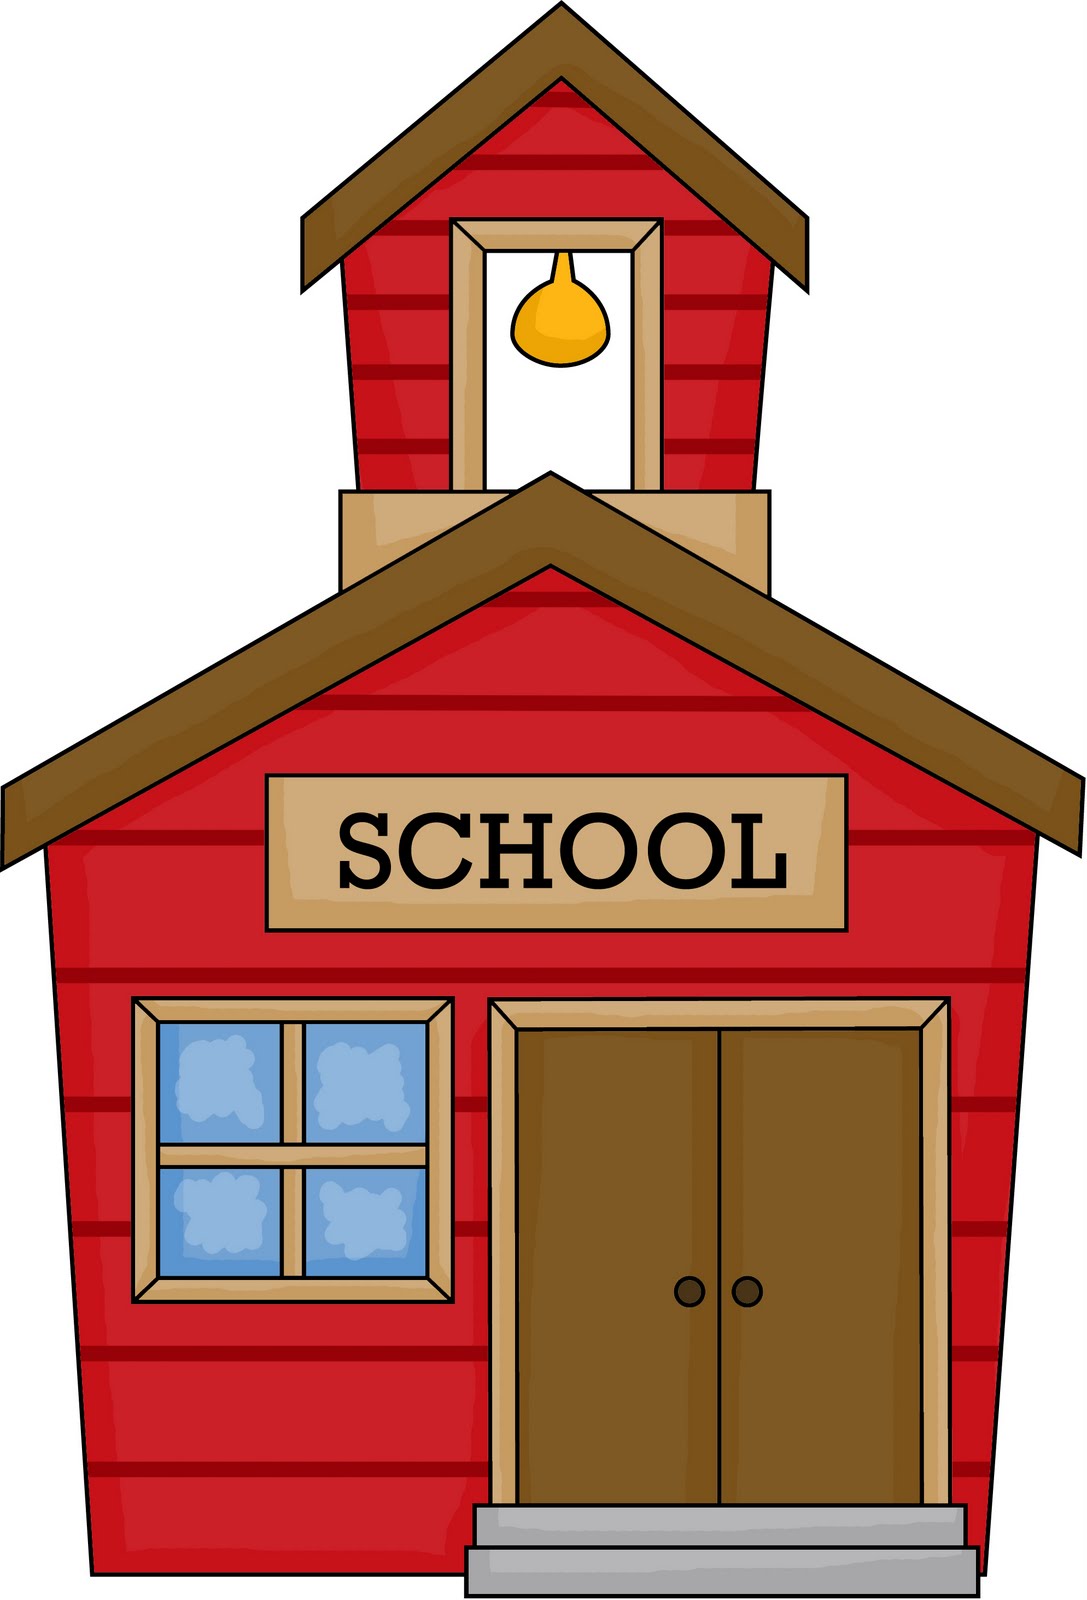 school house images - Clipart School